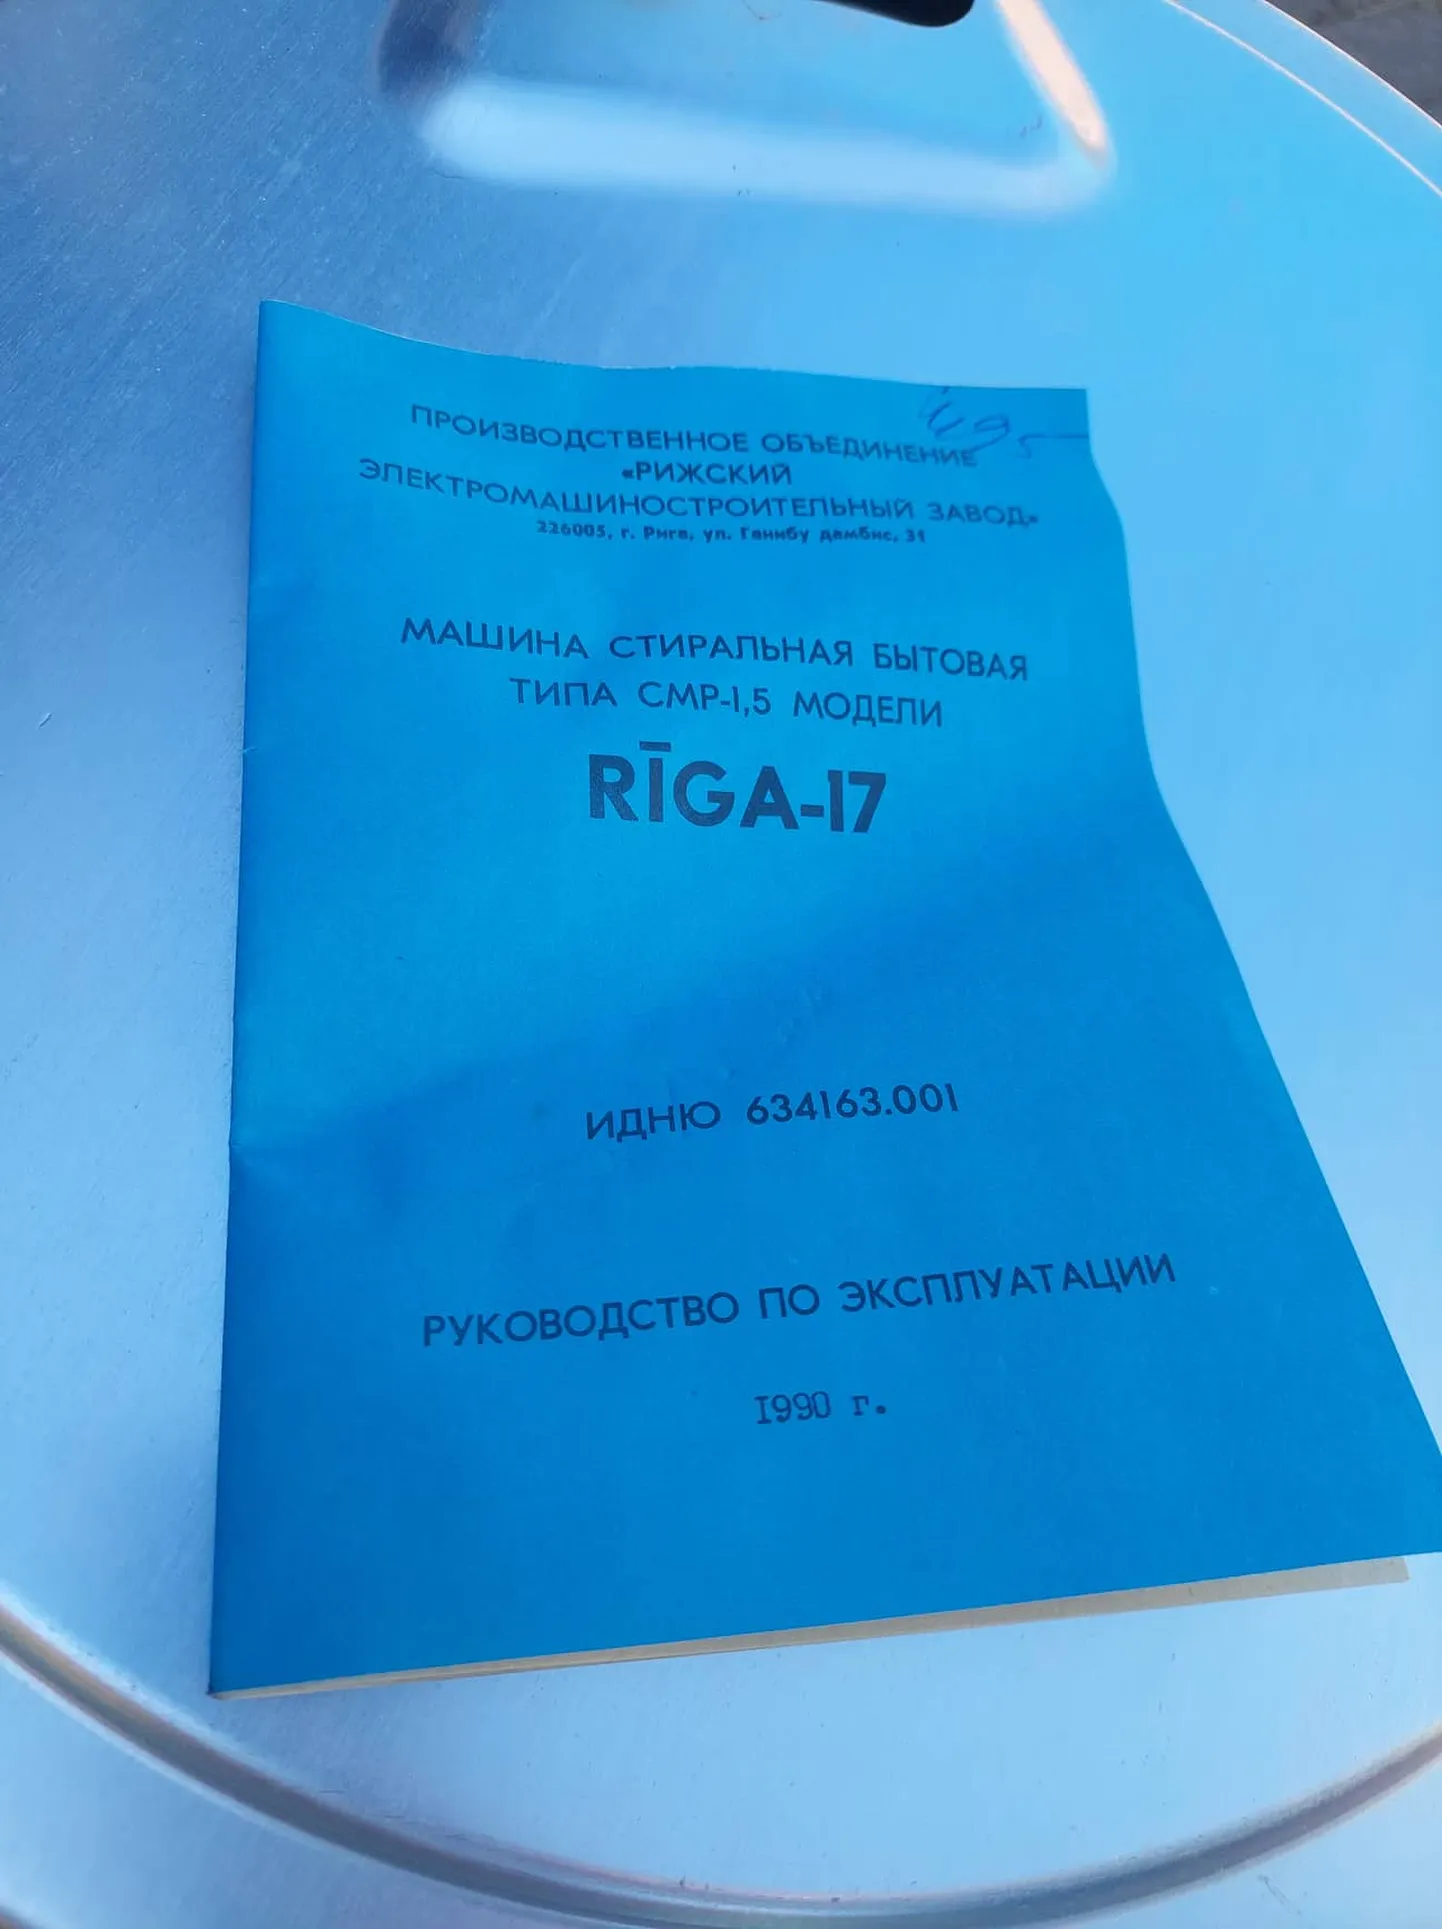 Riga-17